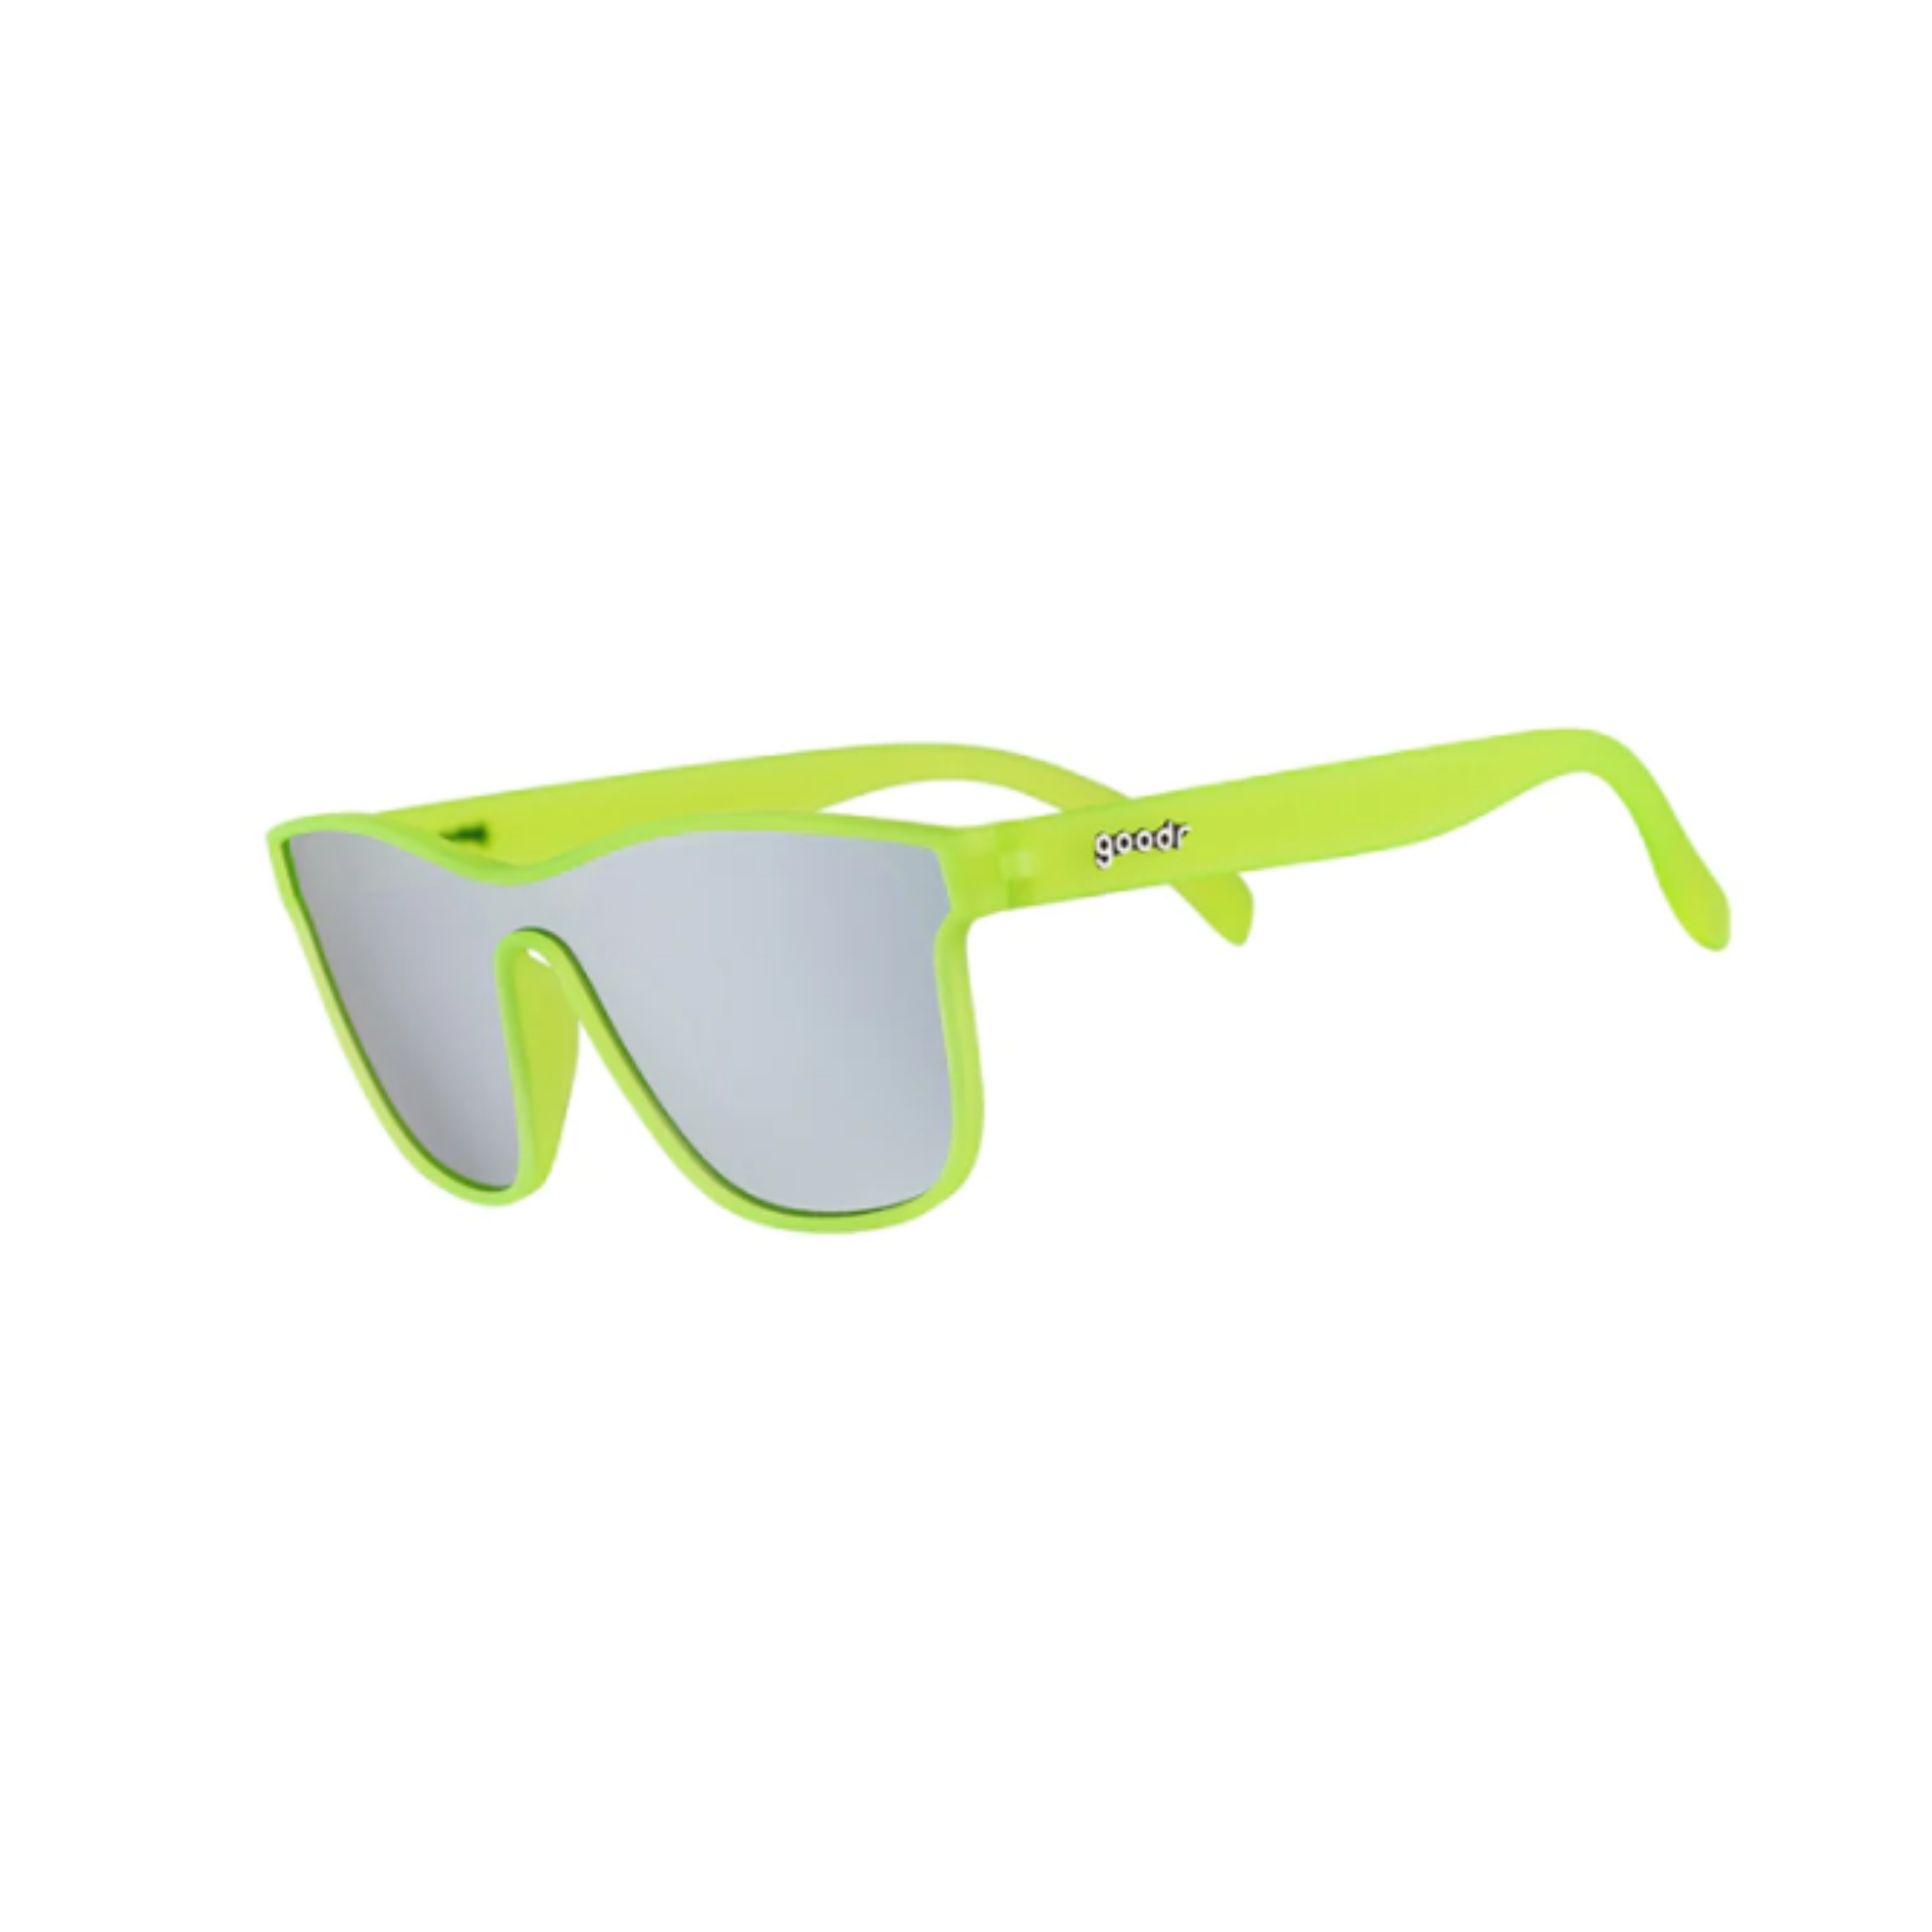 Goodr Vrg Sunglasses (Naeon Flux Capacitor)